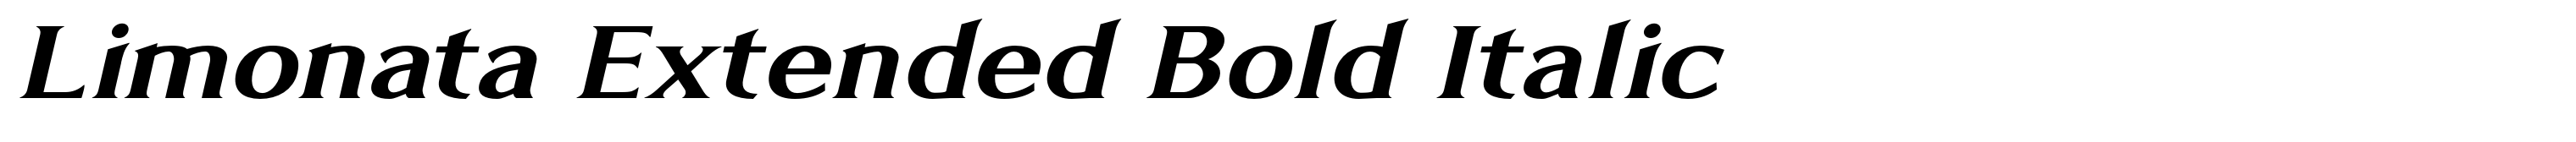 Limonata Extended Bold Italic